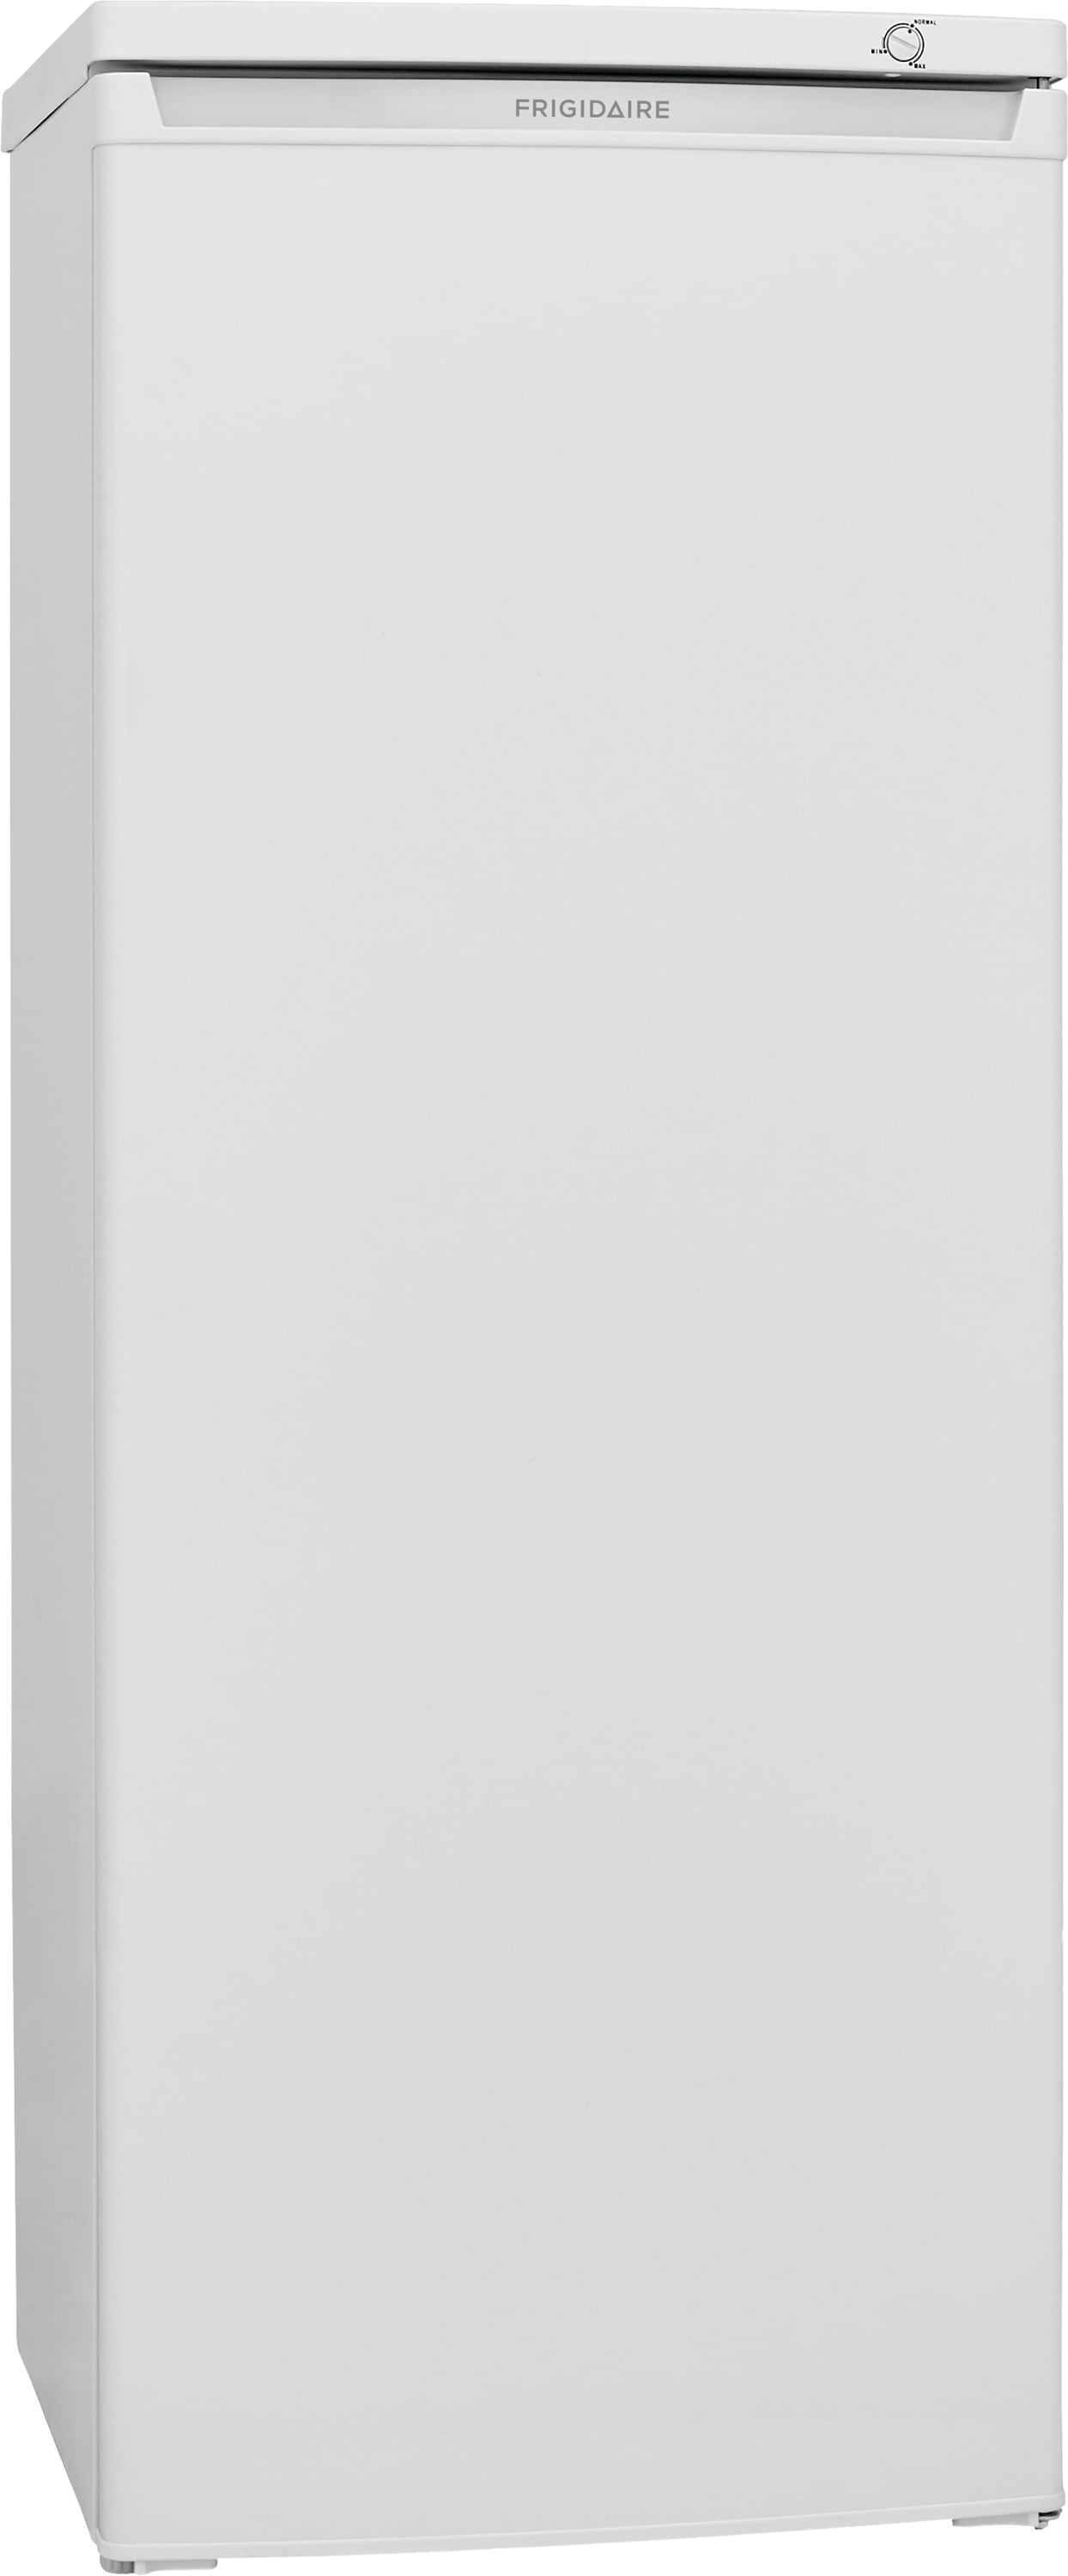 Koolatron KTUF196 22 Inch White Freestanding Upright Counter Depth Freezer